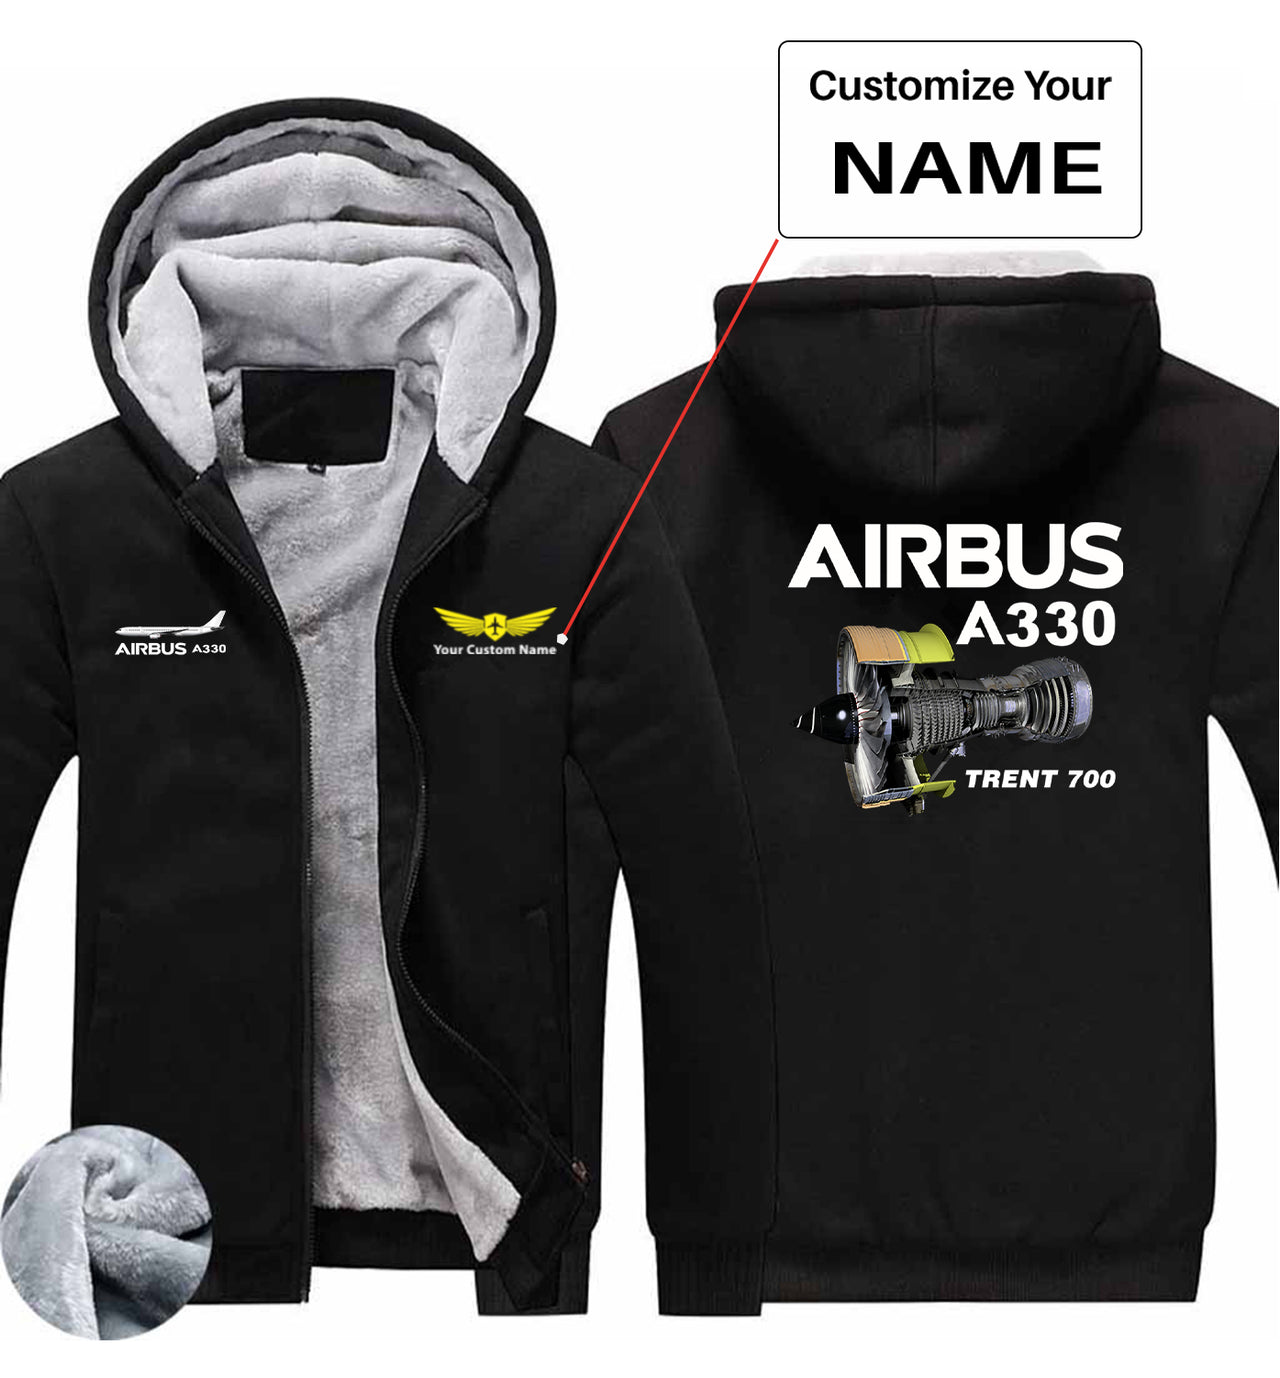 Airbus A330 & Trent 700 Engine Designed Zipped Sweatshirts